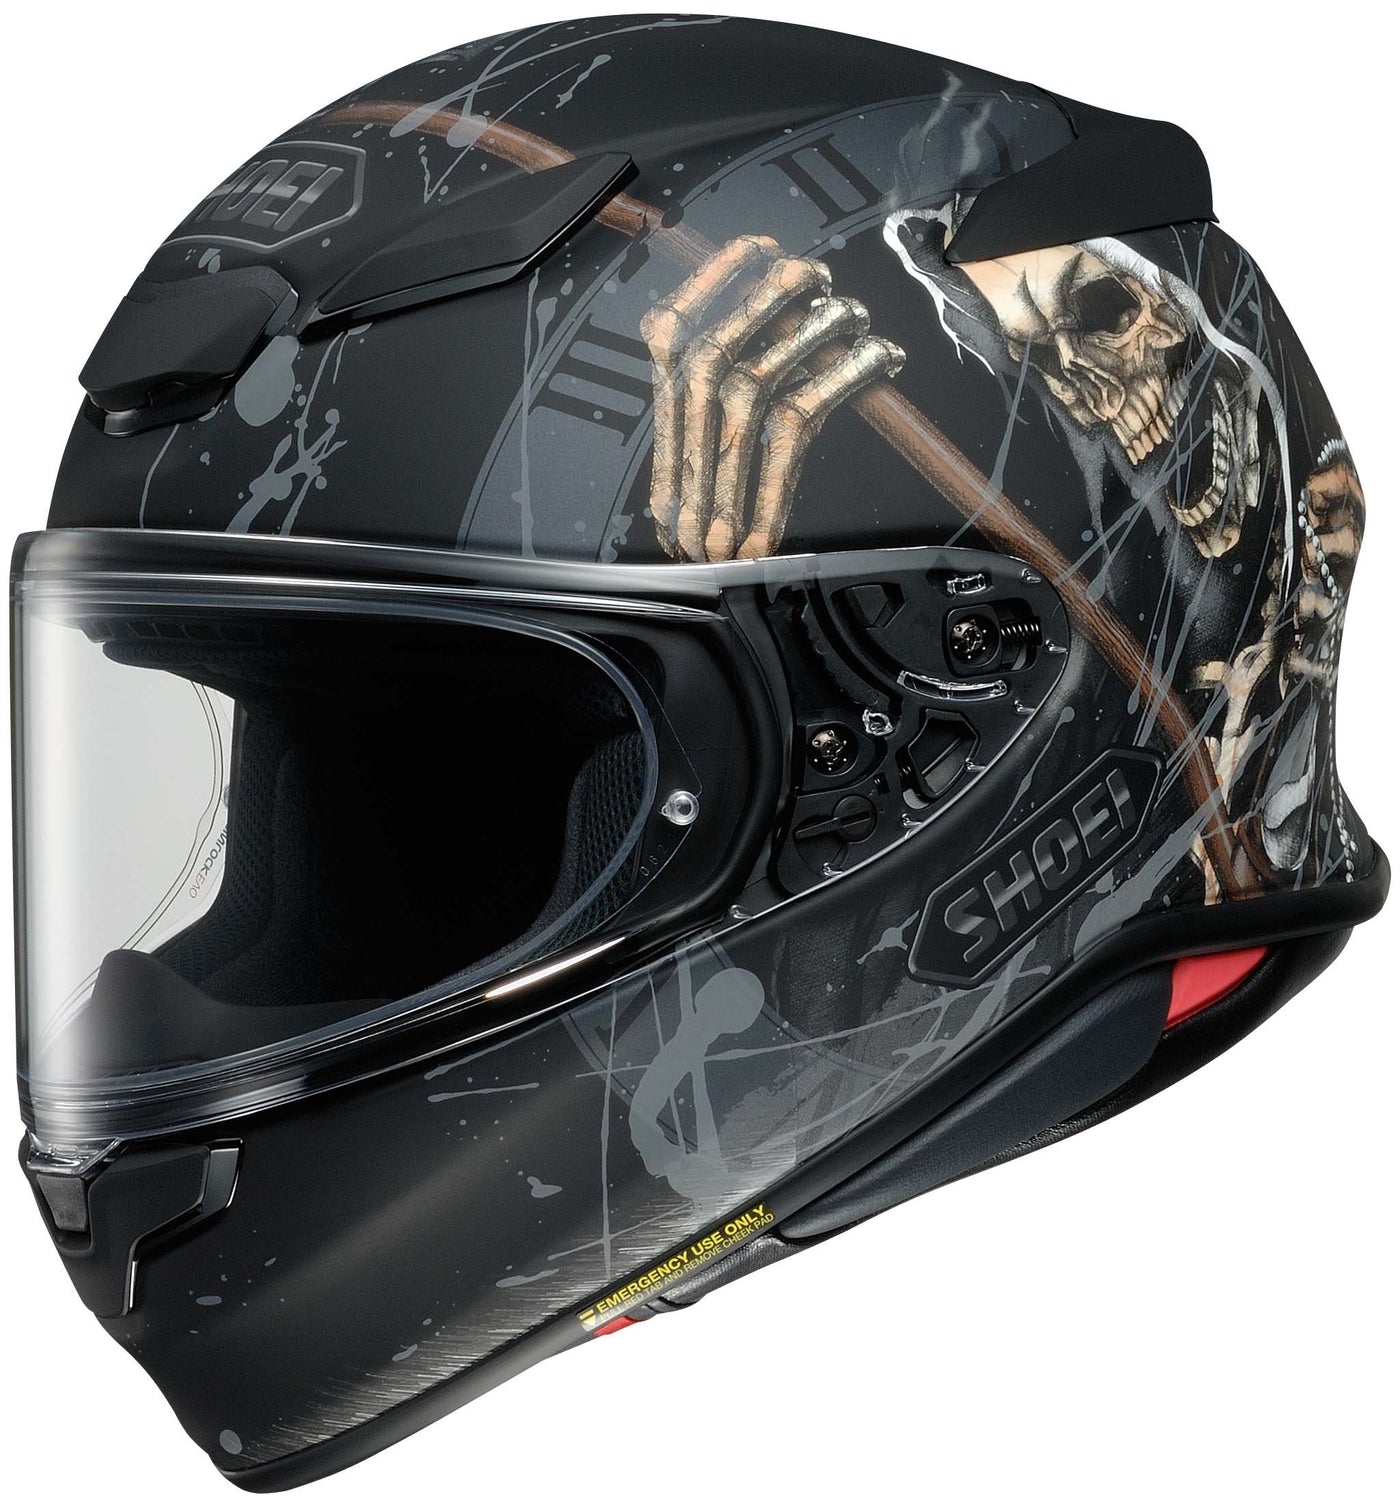 Shoei RF-1400 Faust Full Face Motorcycle Helmet